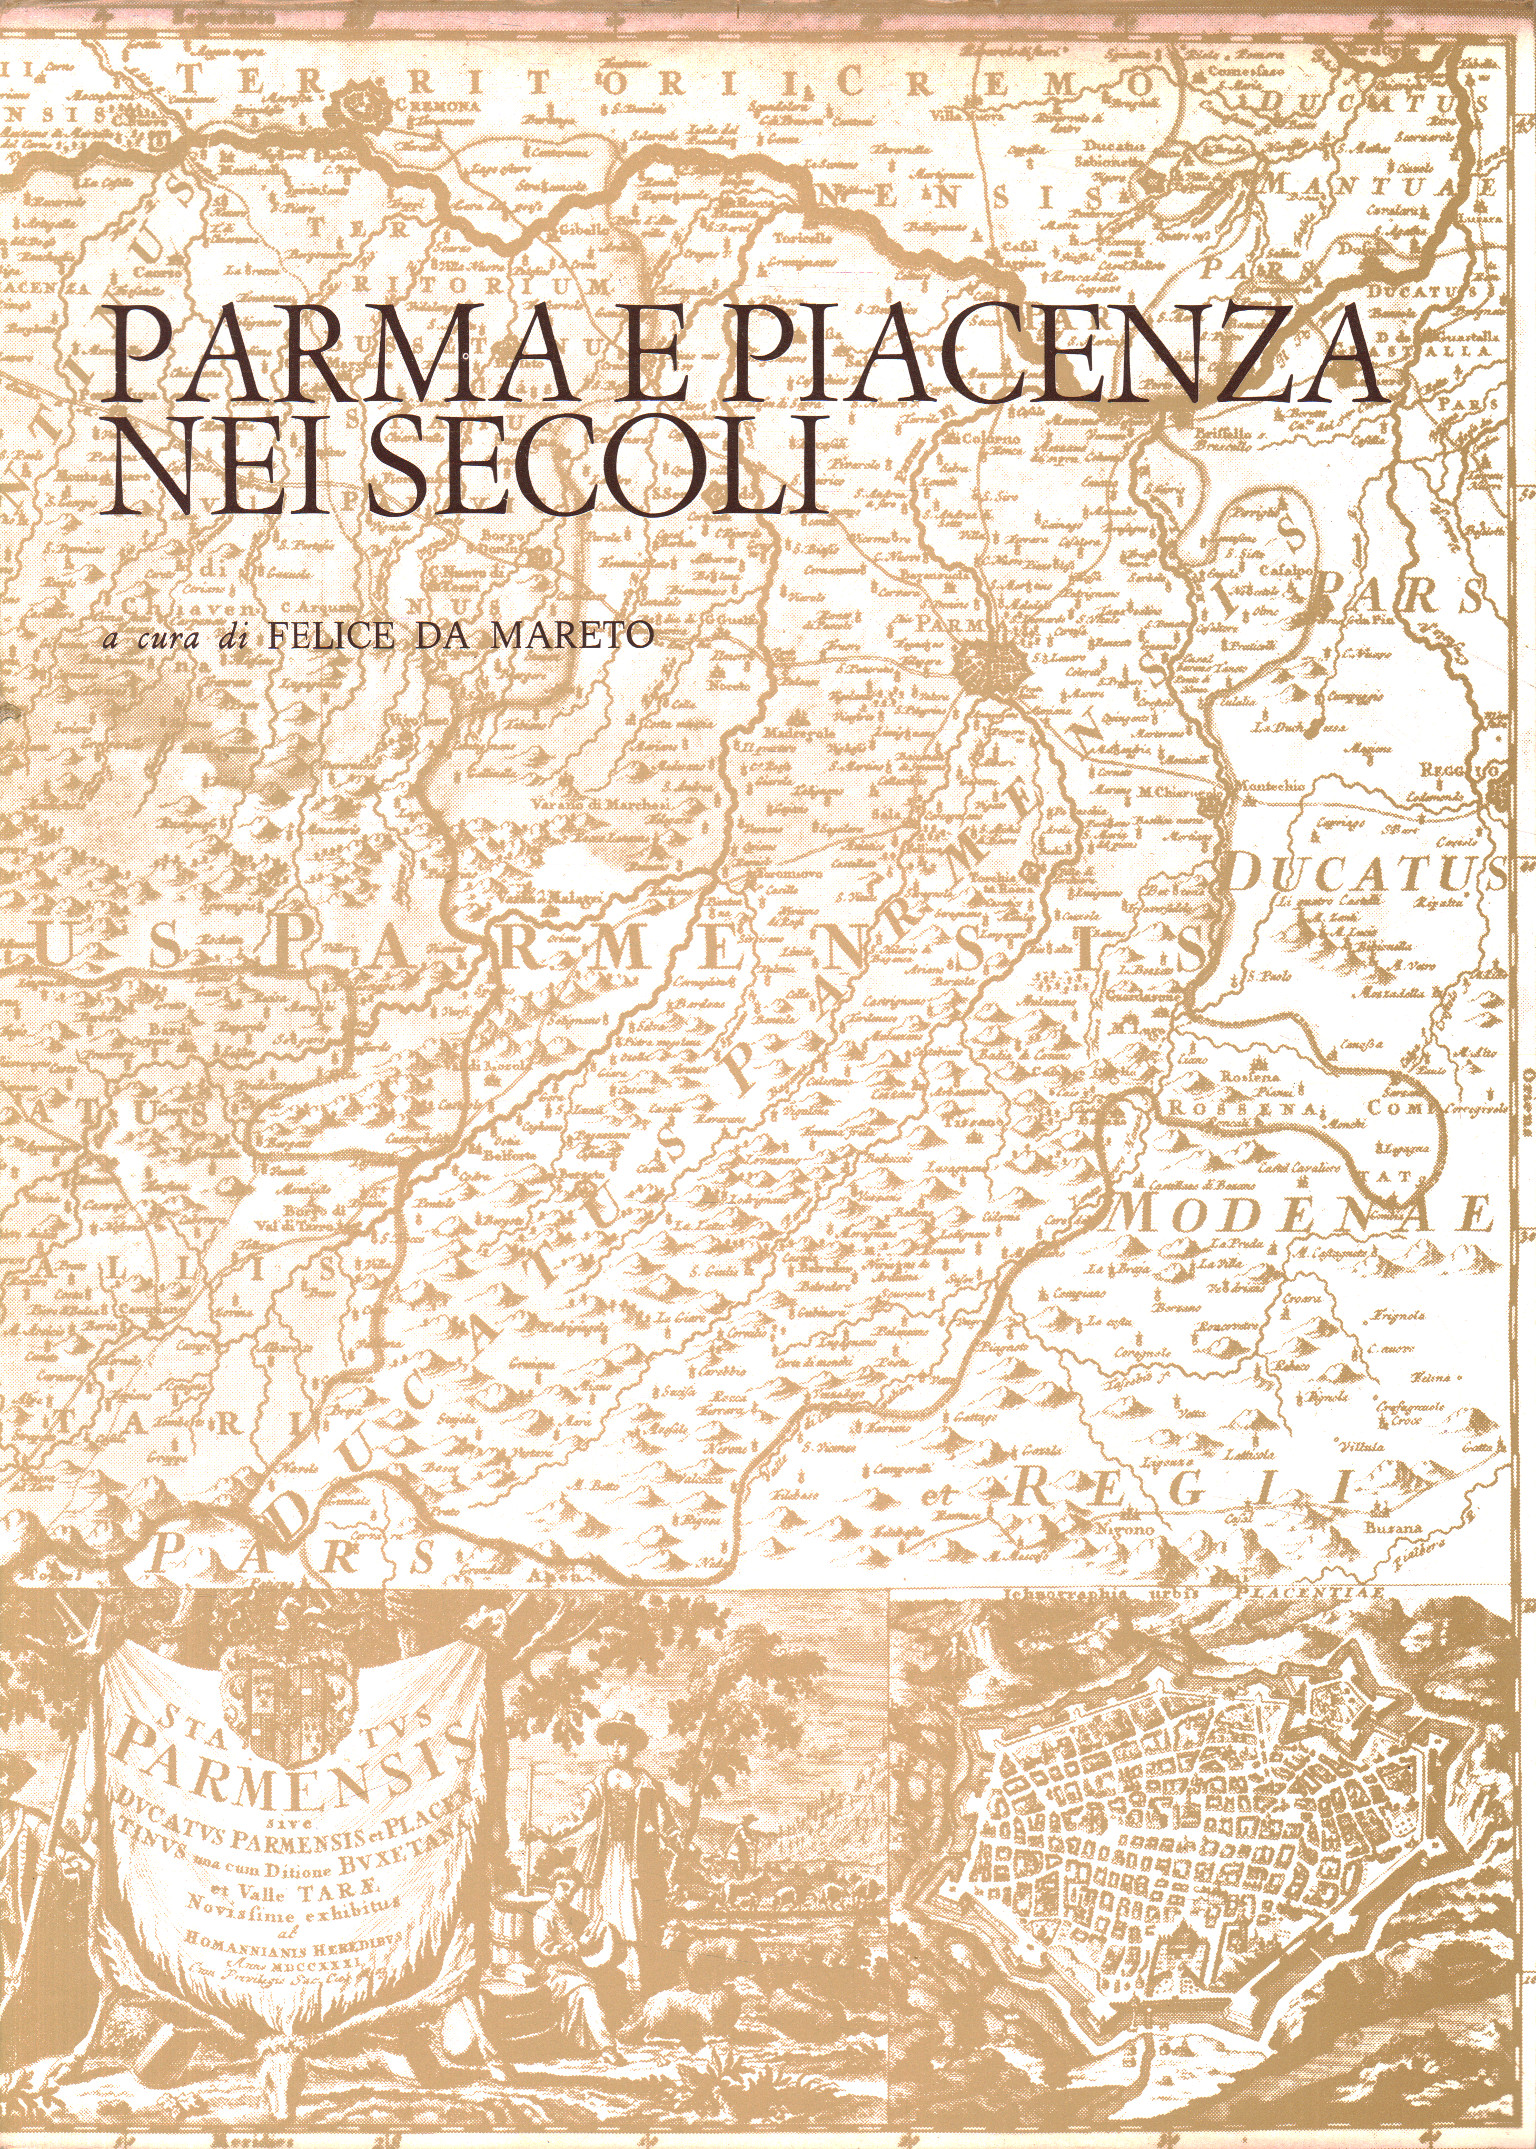 Parma e Piacenza nei secoli